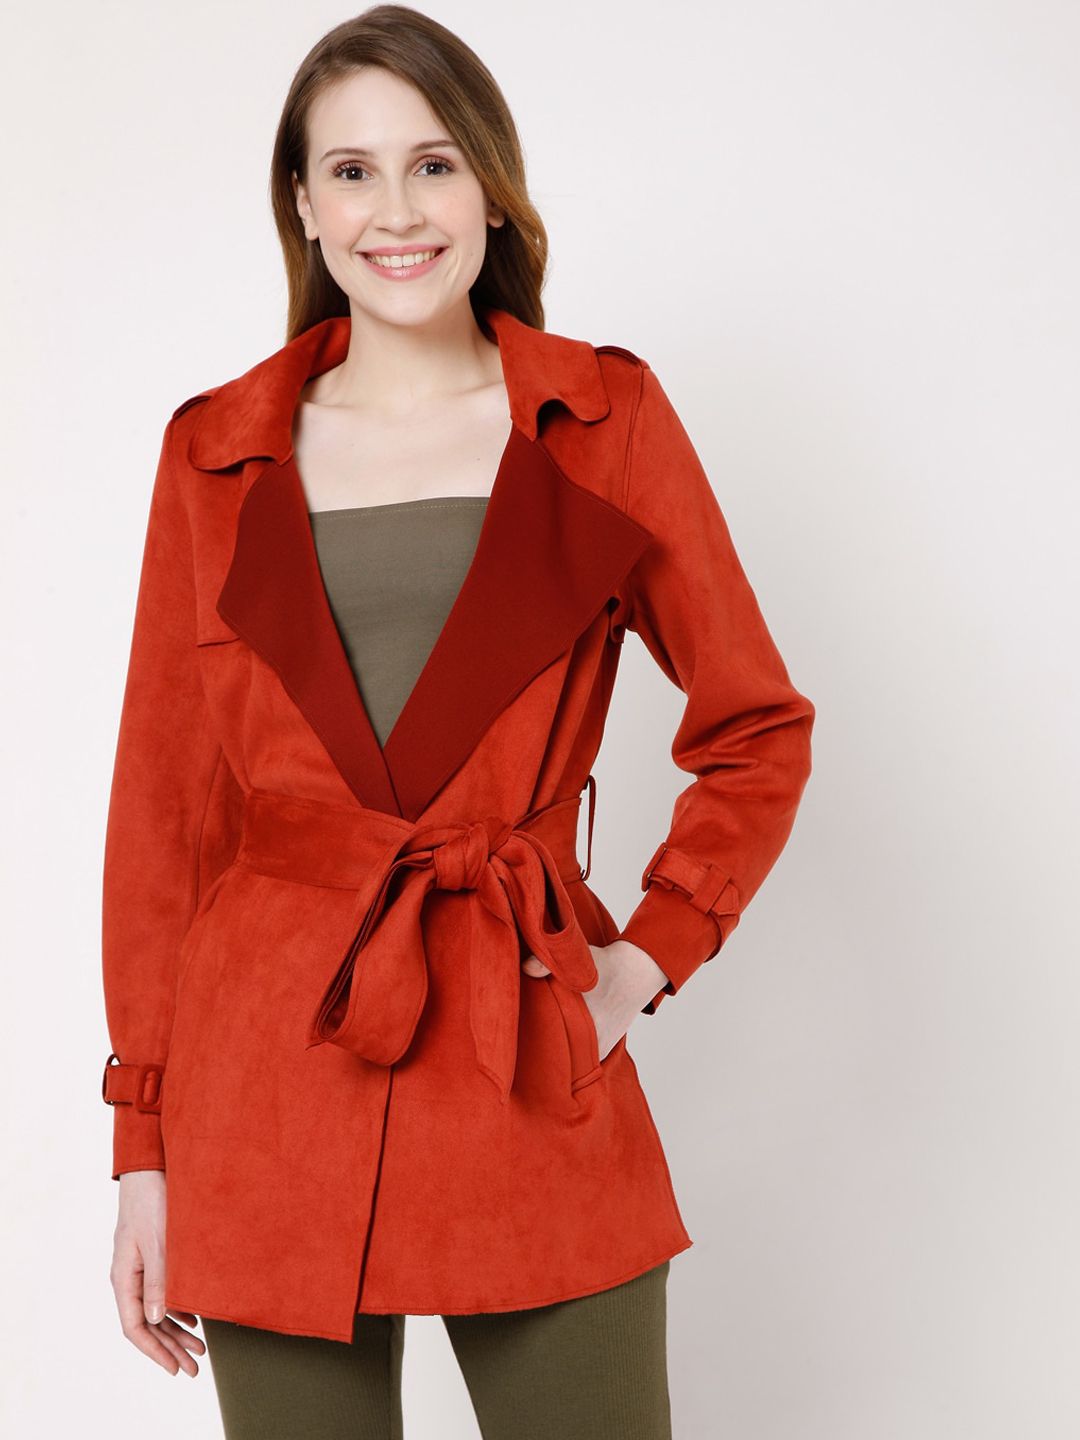 Vero Moda Women Red Tailored Jacket Price in India